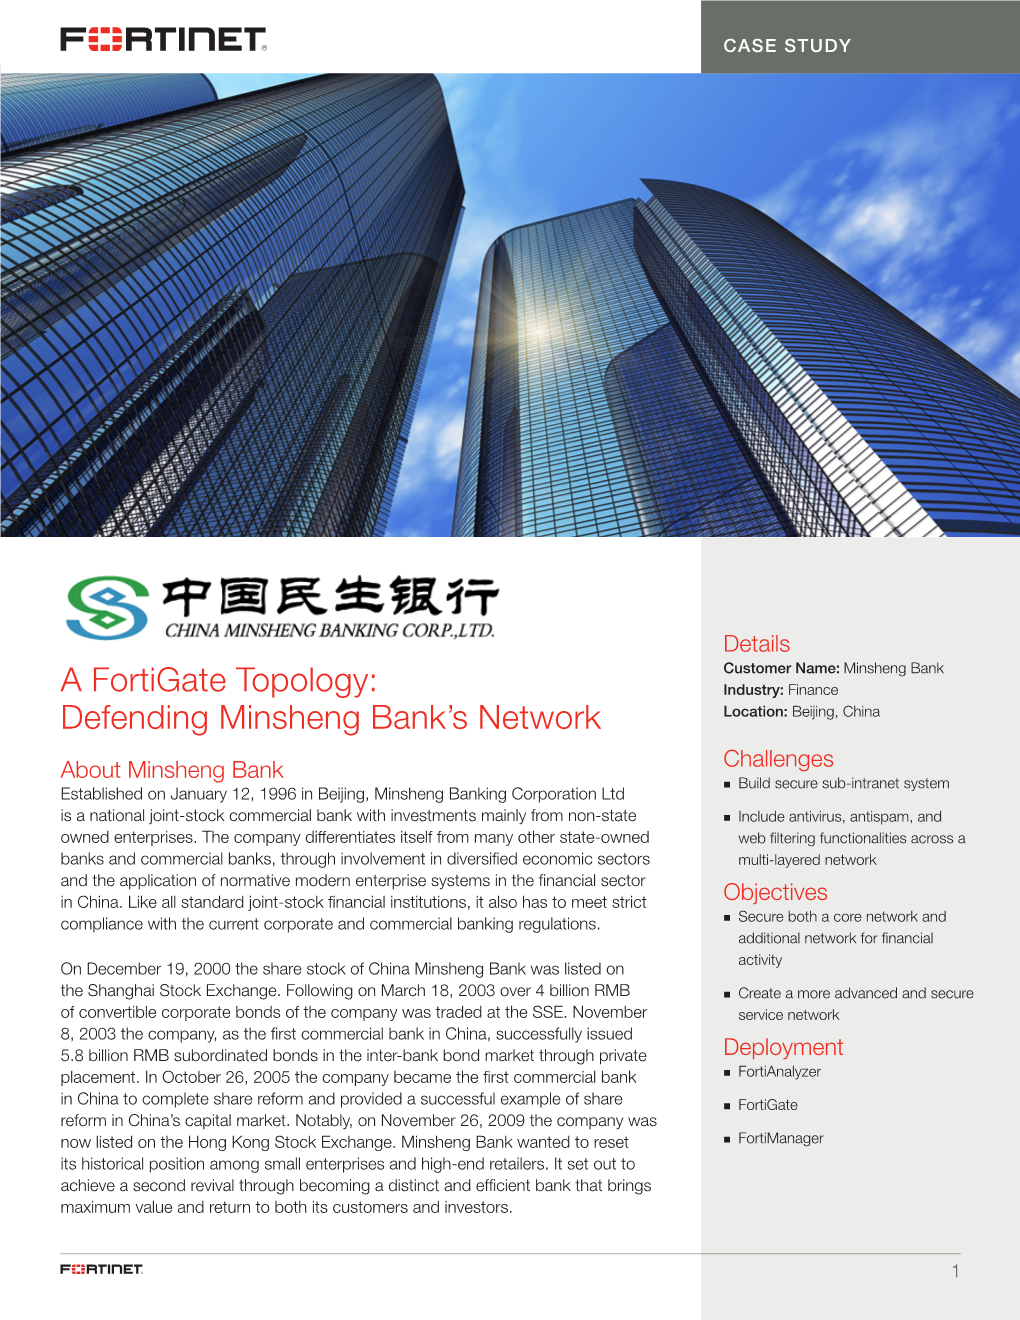 Minsheng Bank a Fortigate Topology: Industry: Finance Defending Minsheng Bank’S Network Location: Beijing, China